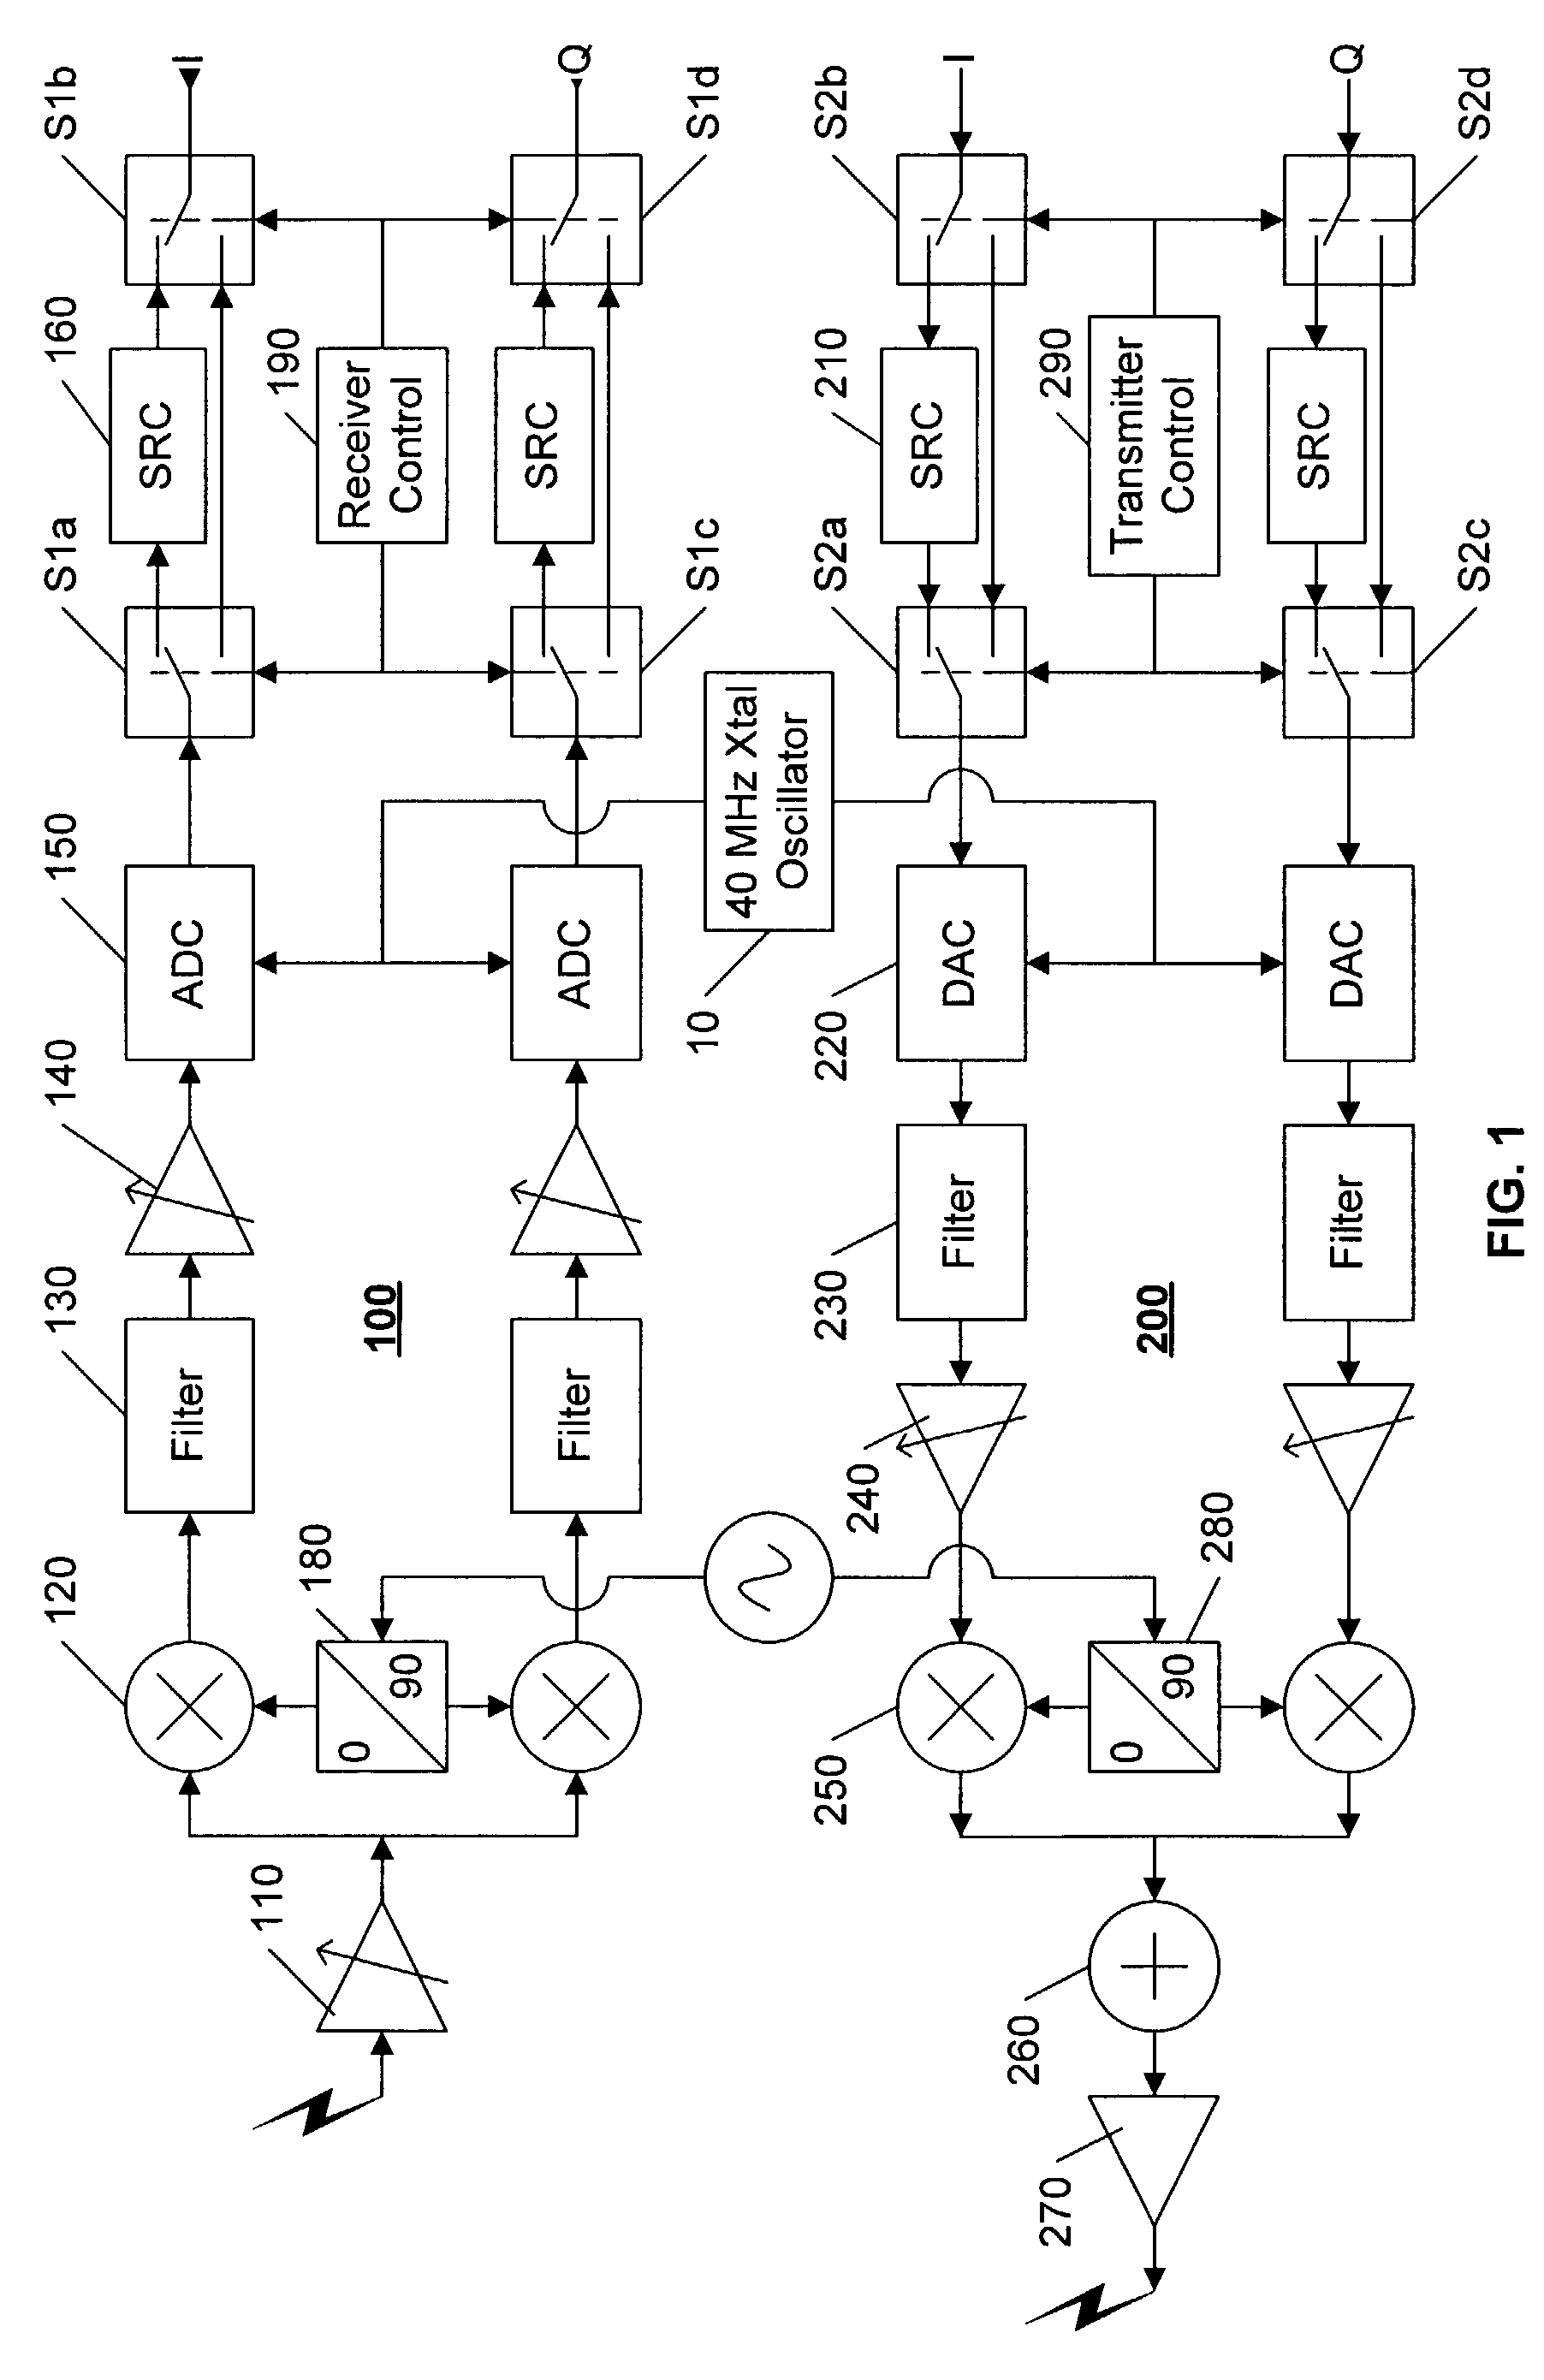 Single oscillator DSSS and OFDM radio receiver